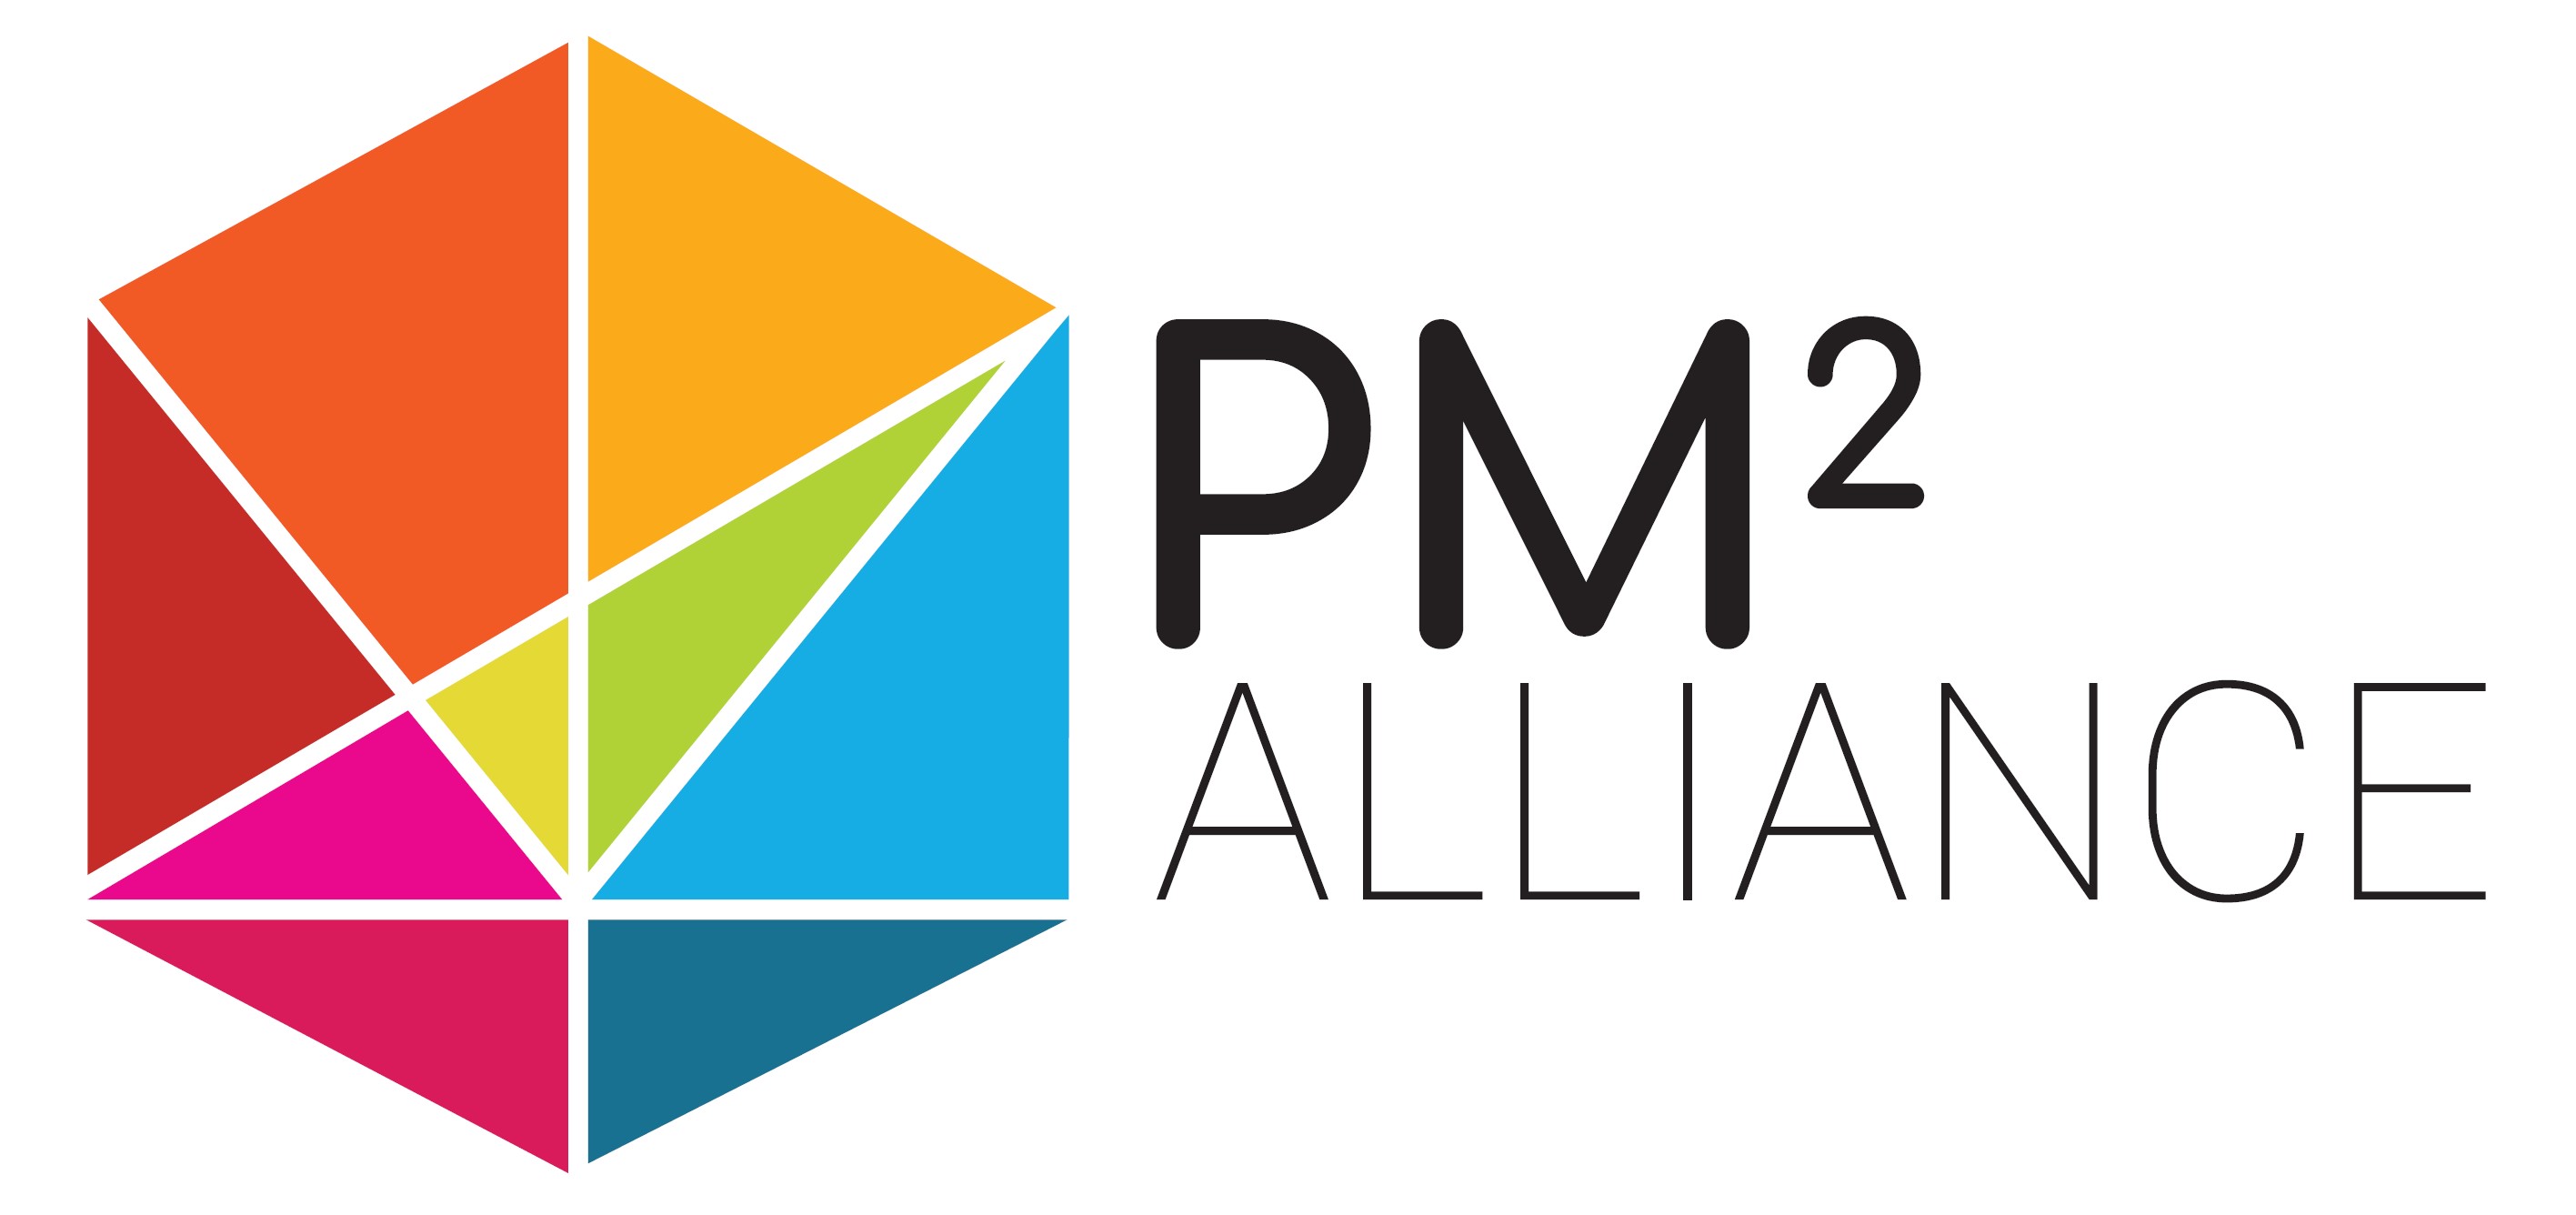 PM2 Alliance